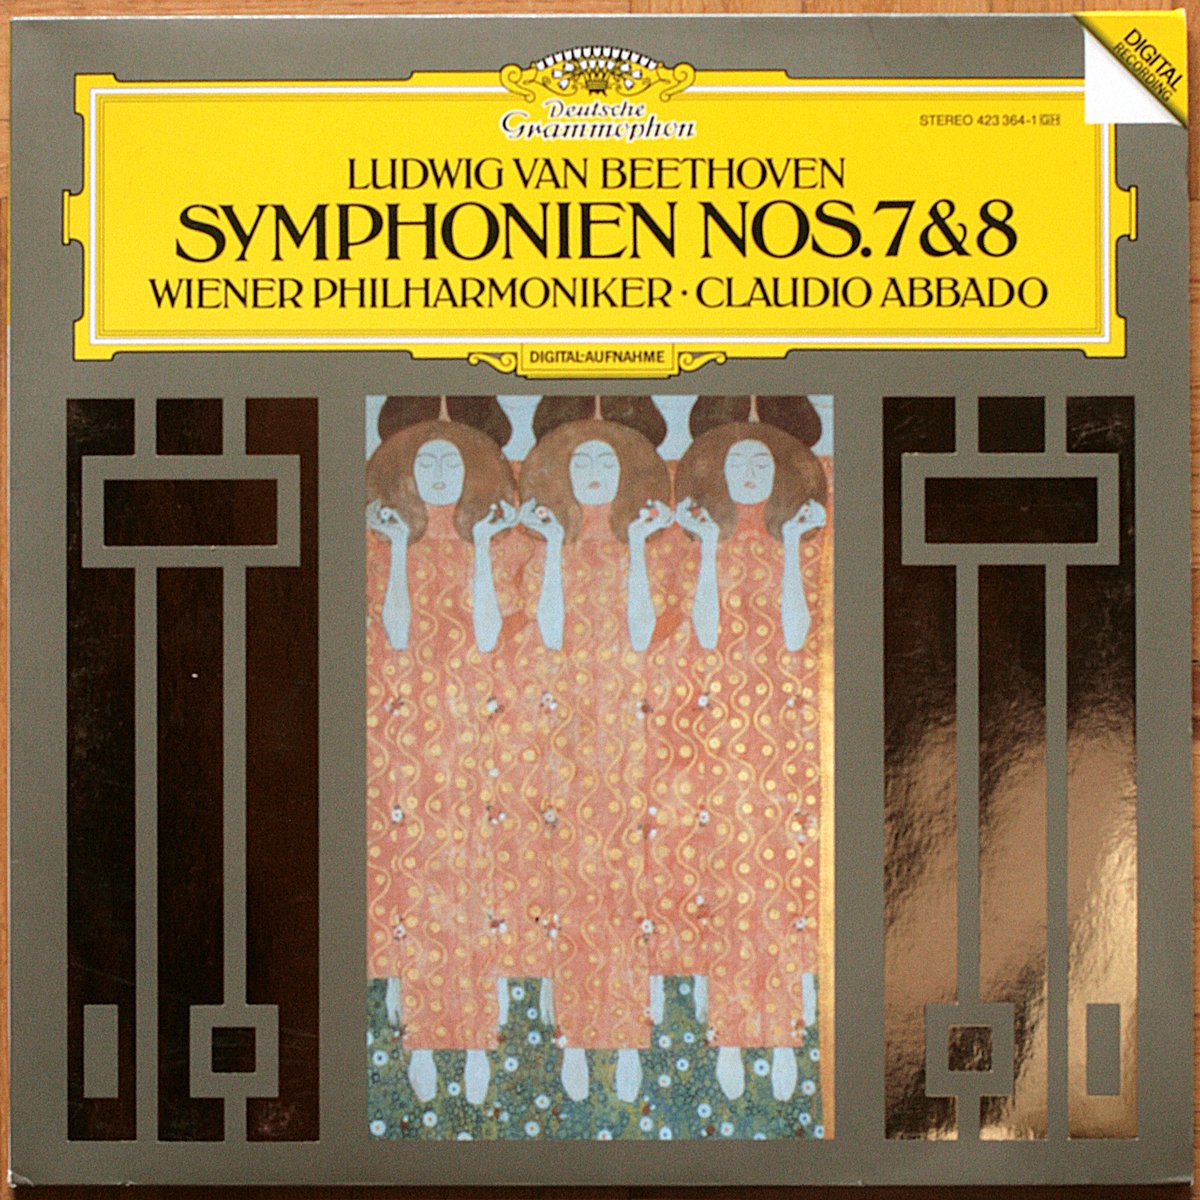 DGG 423 364 Beethoven Symphonies 7 & 8 Abbado DGG Digital Aufnahme